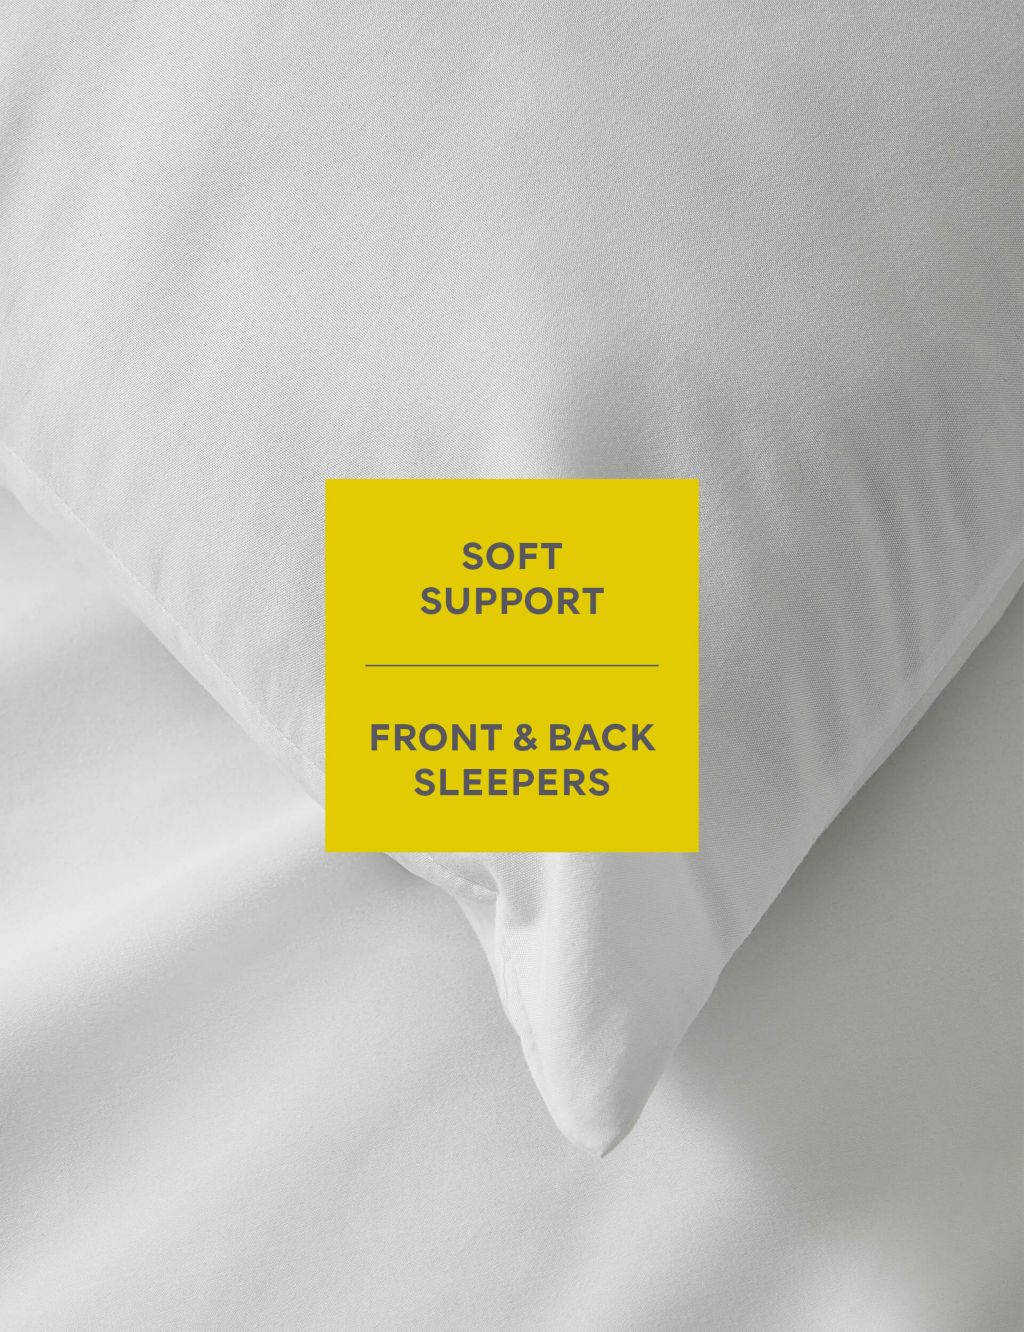 2pk Simply Soft Medium Pillows 1 of 6